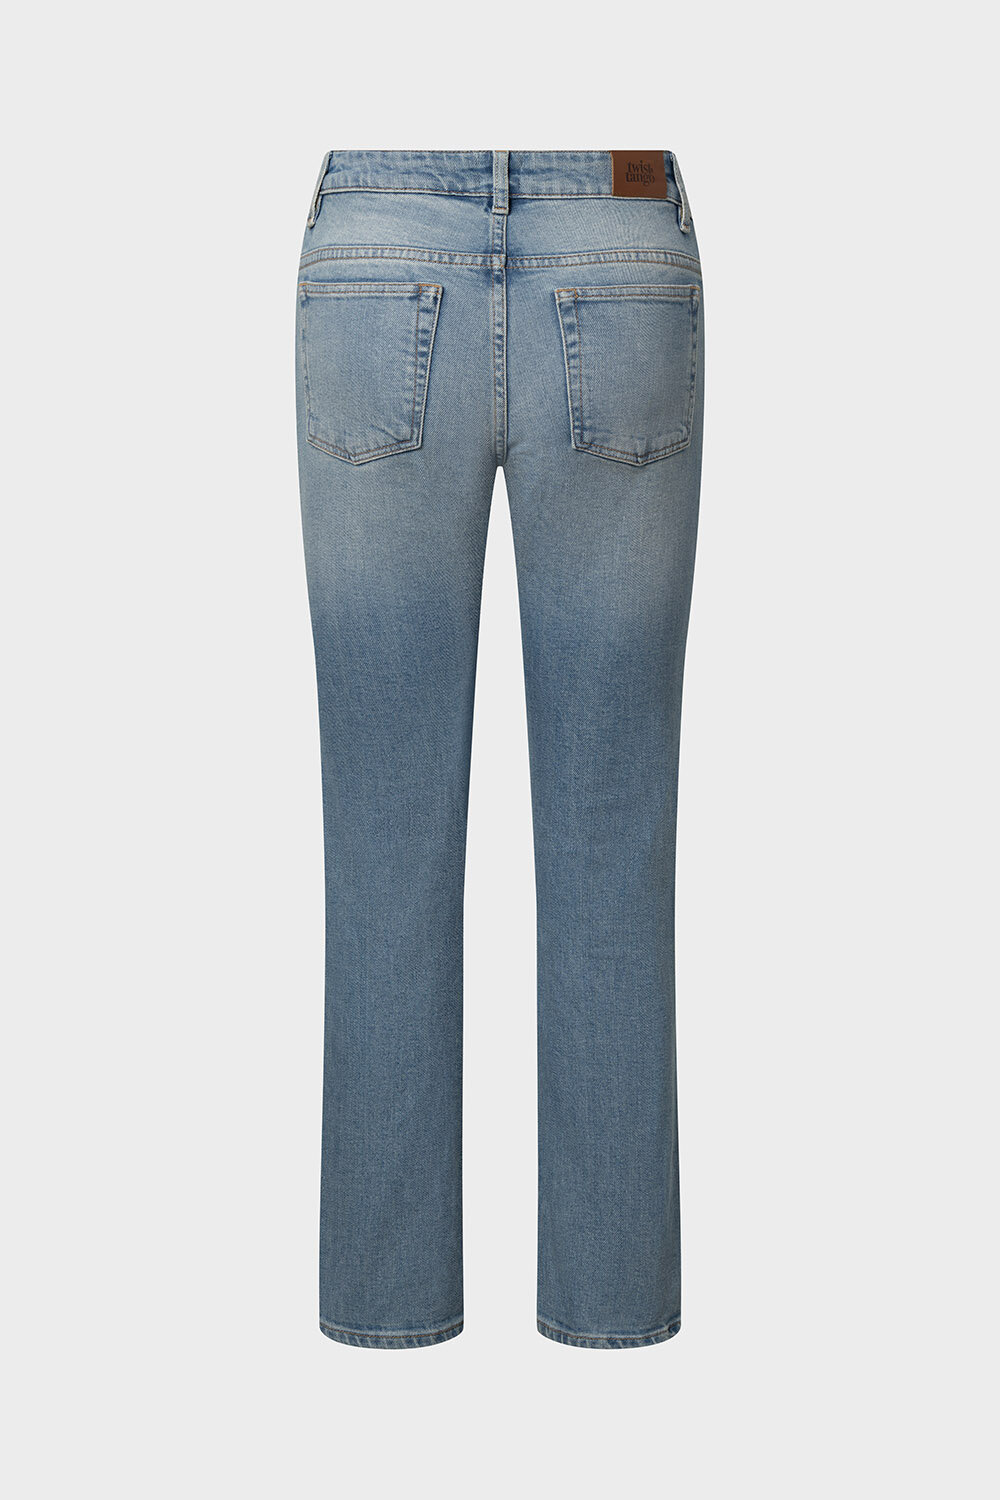 Wendy Comfort Jeans